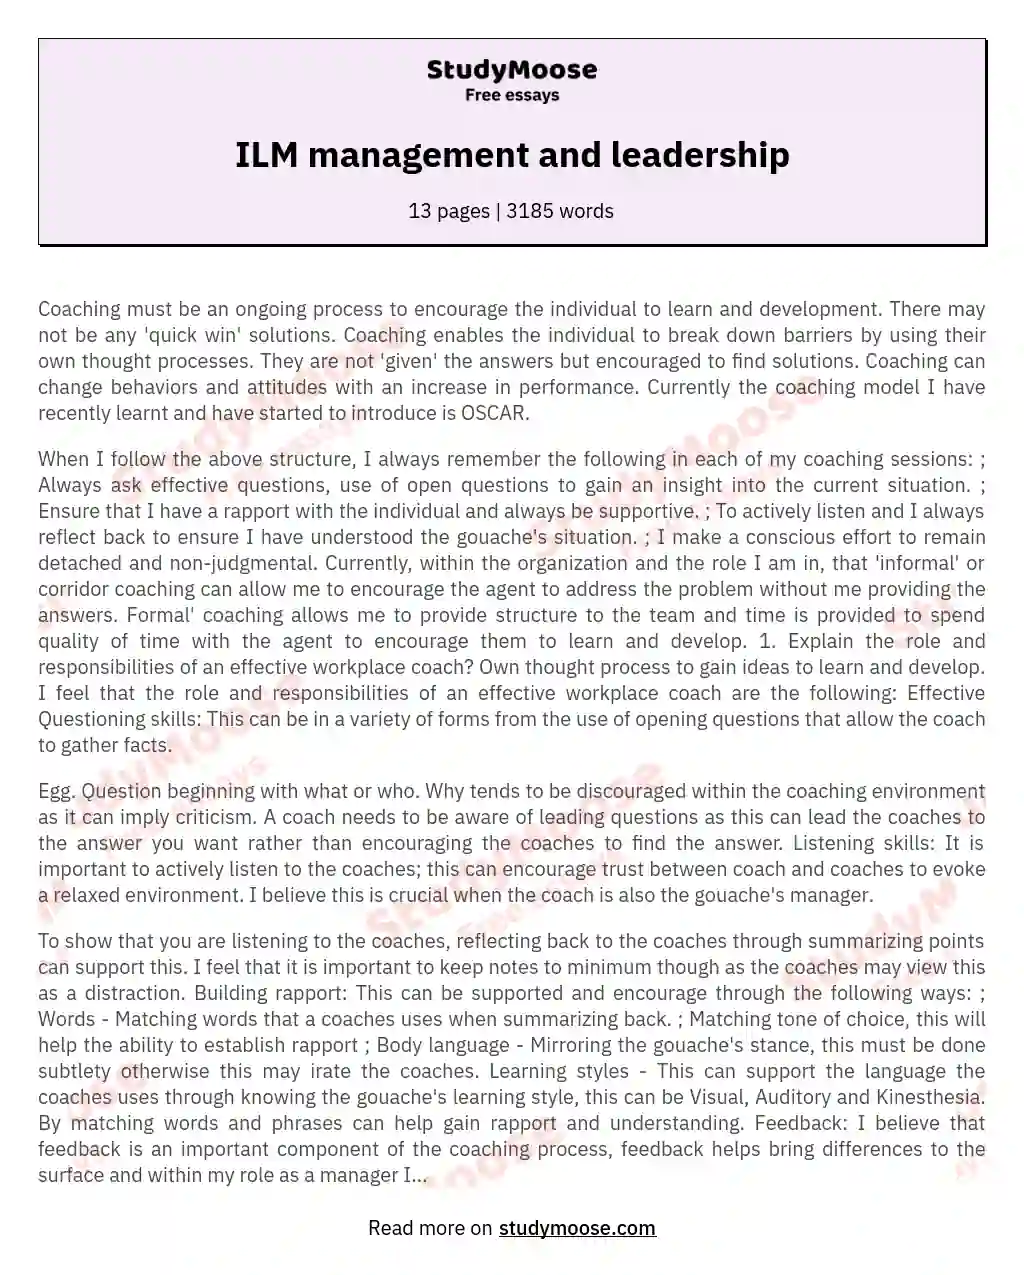 ILM management and leadership essay